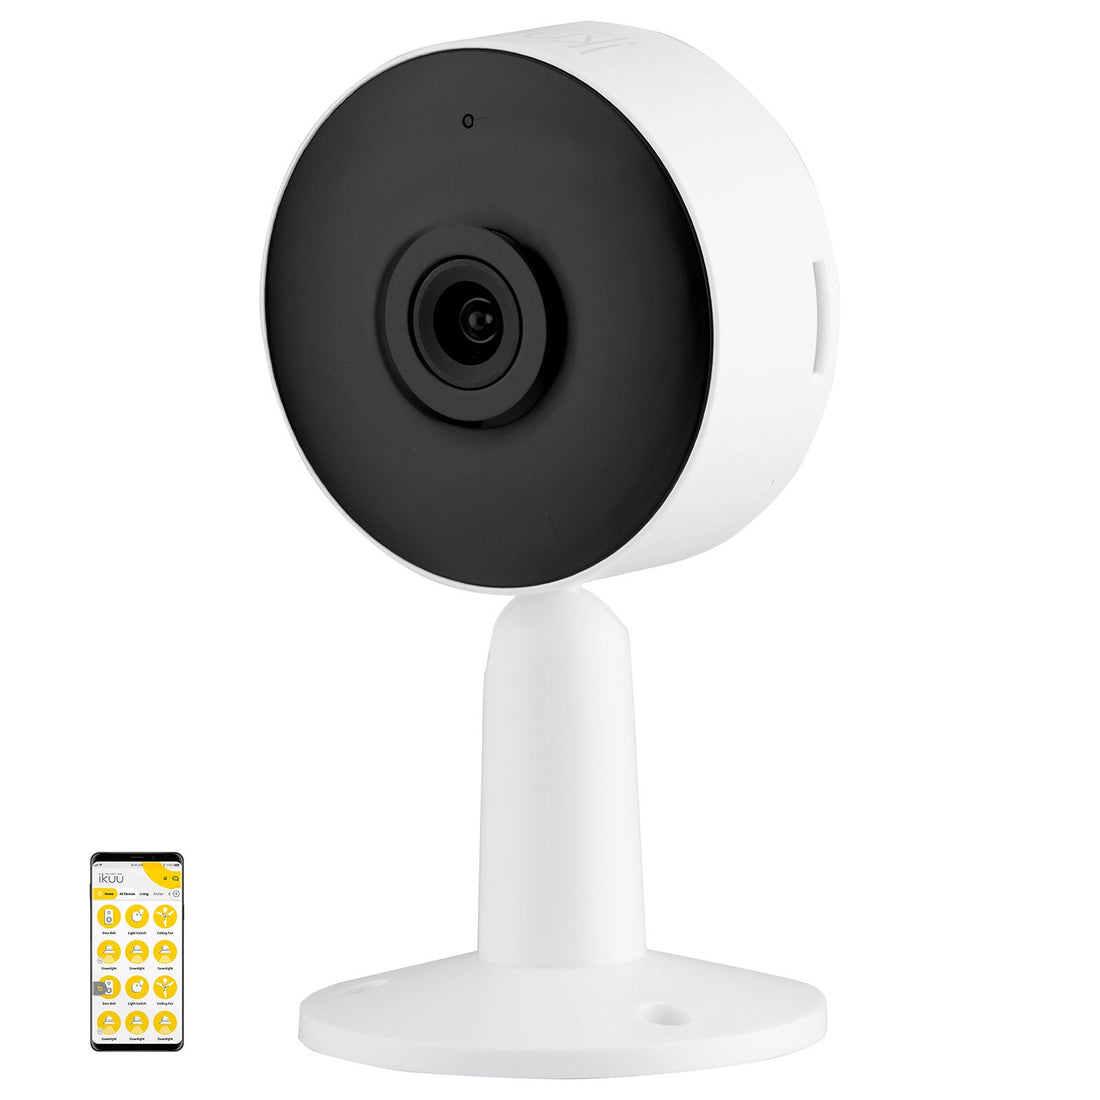 Ikuü Smart Wi-Fi Indoor Stationary Security Camera